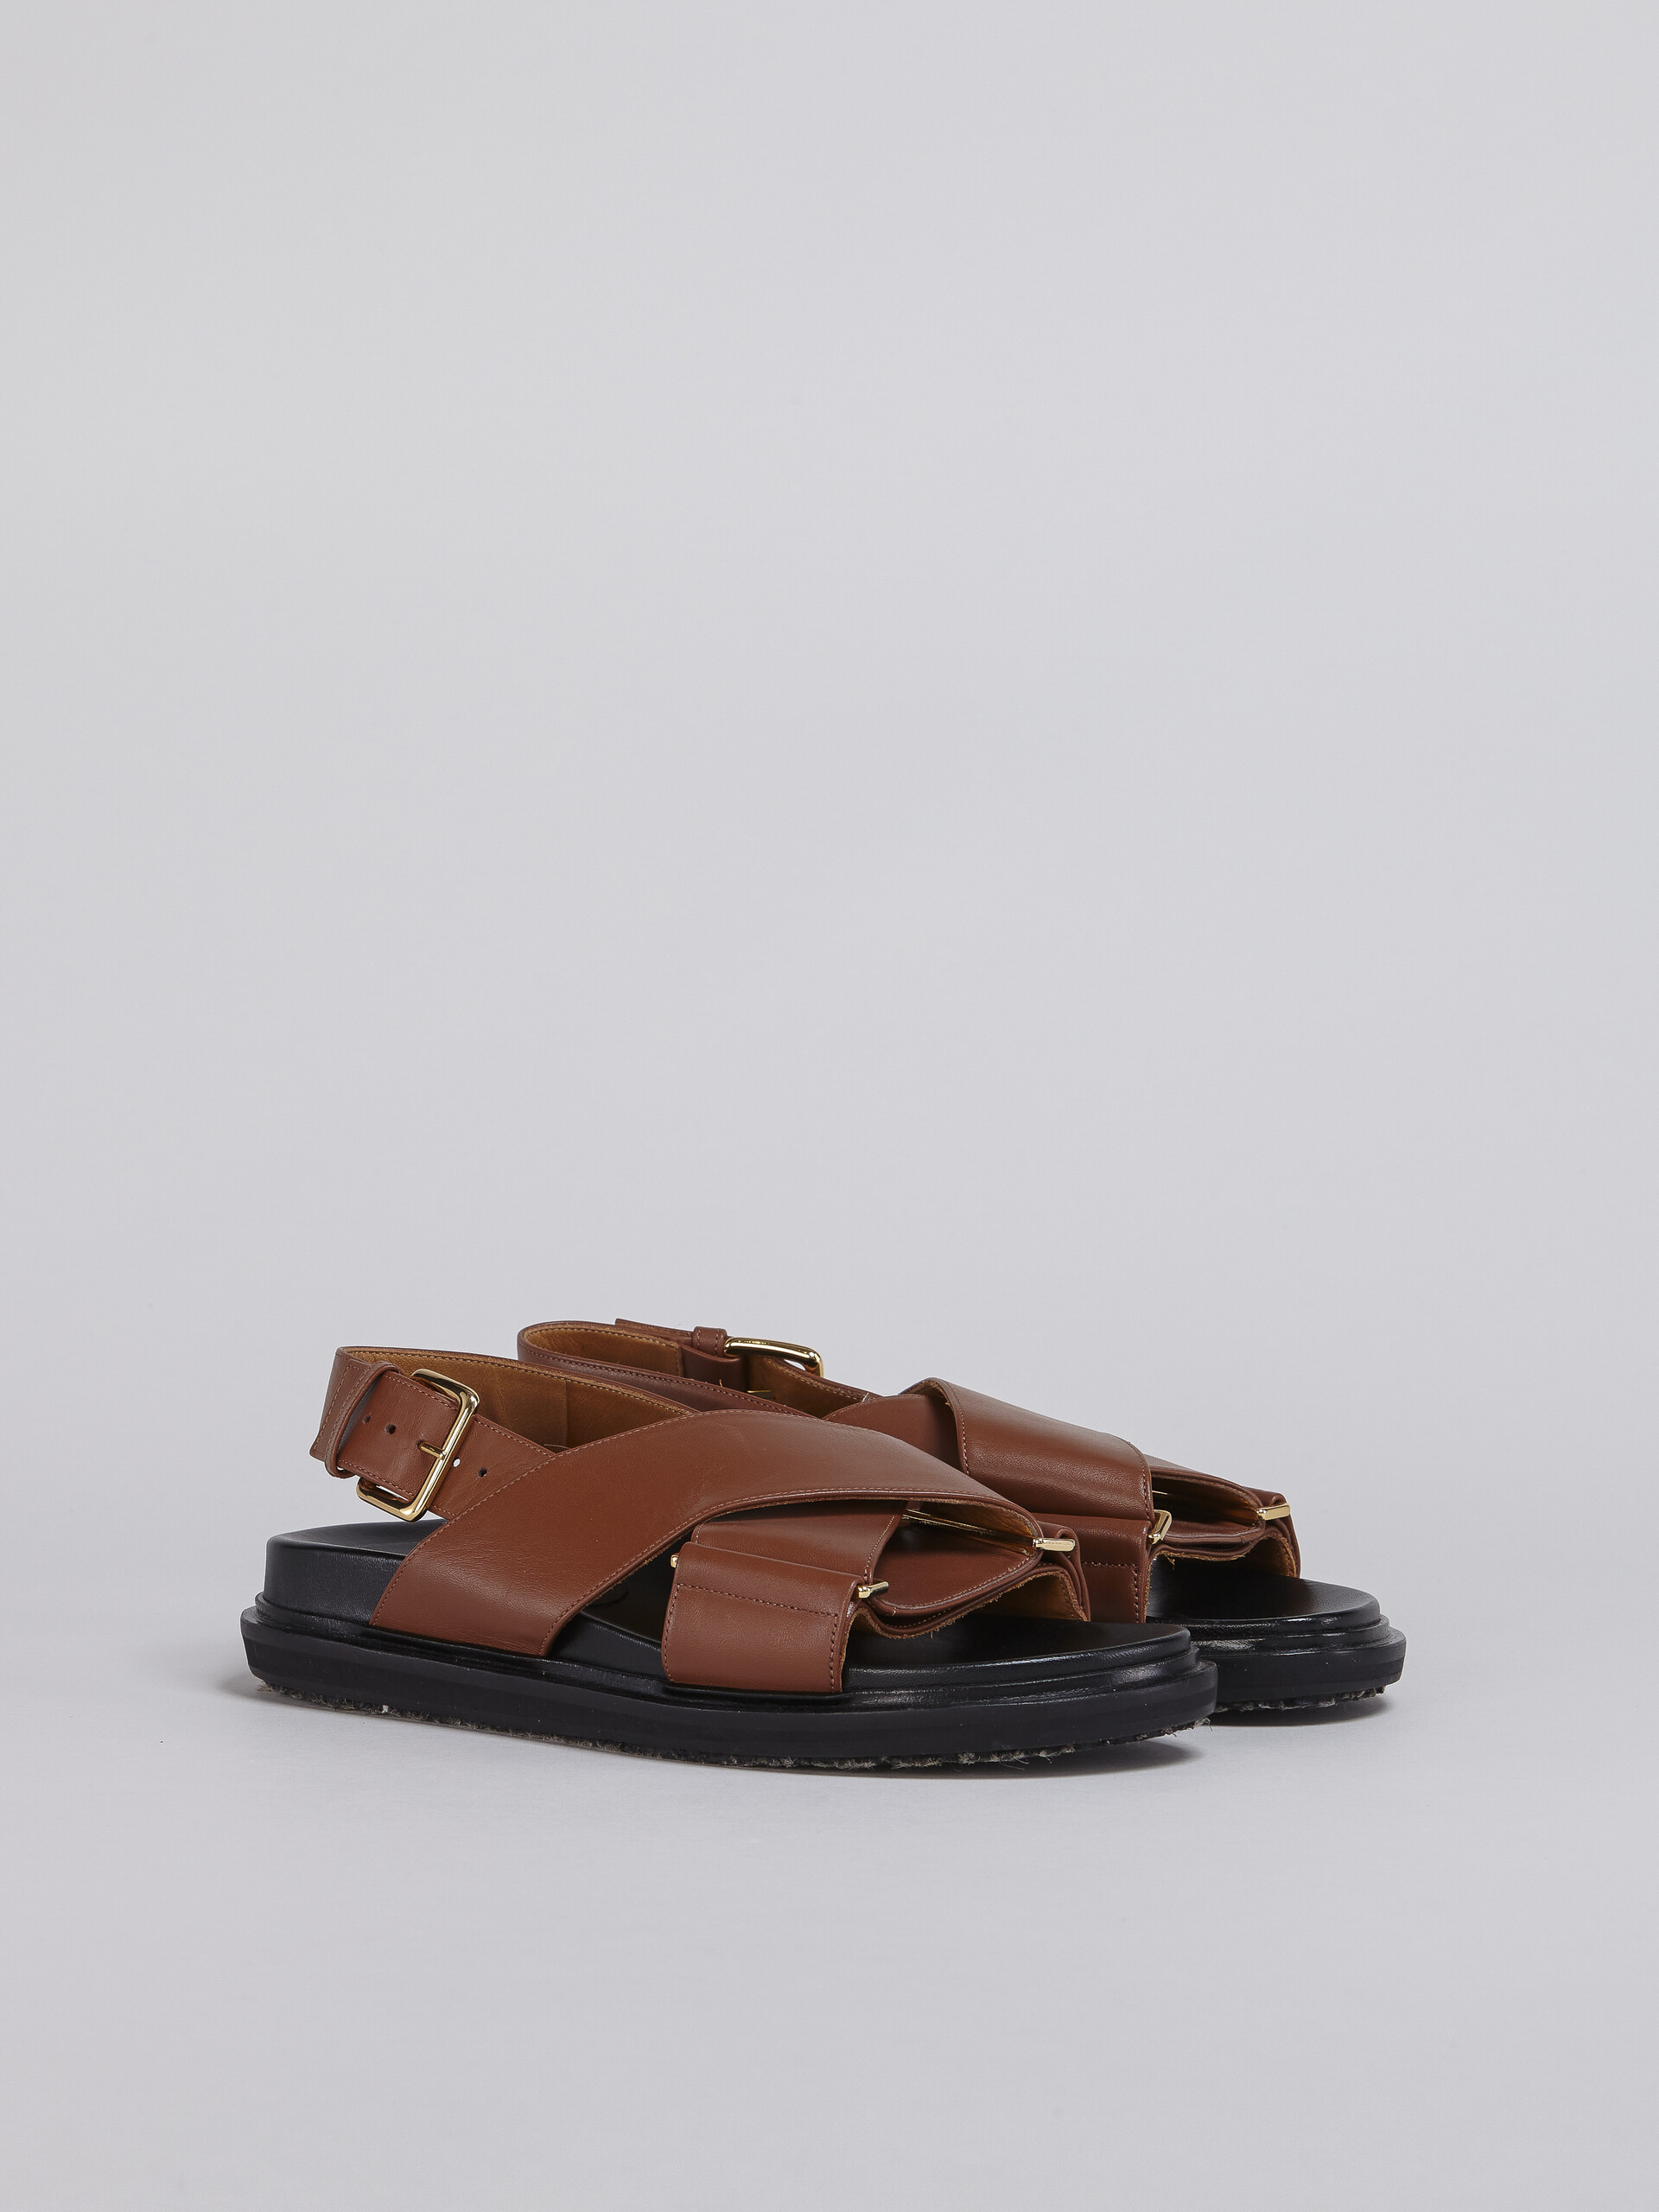 【MARNI】 Leather sandal size41 2017ss